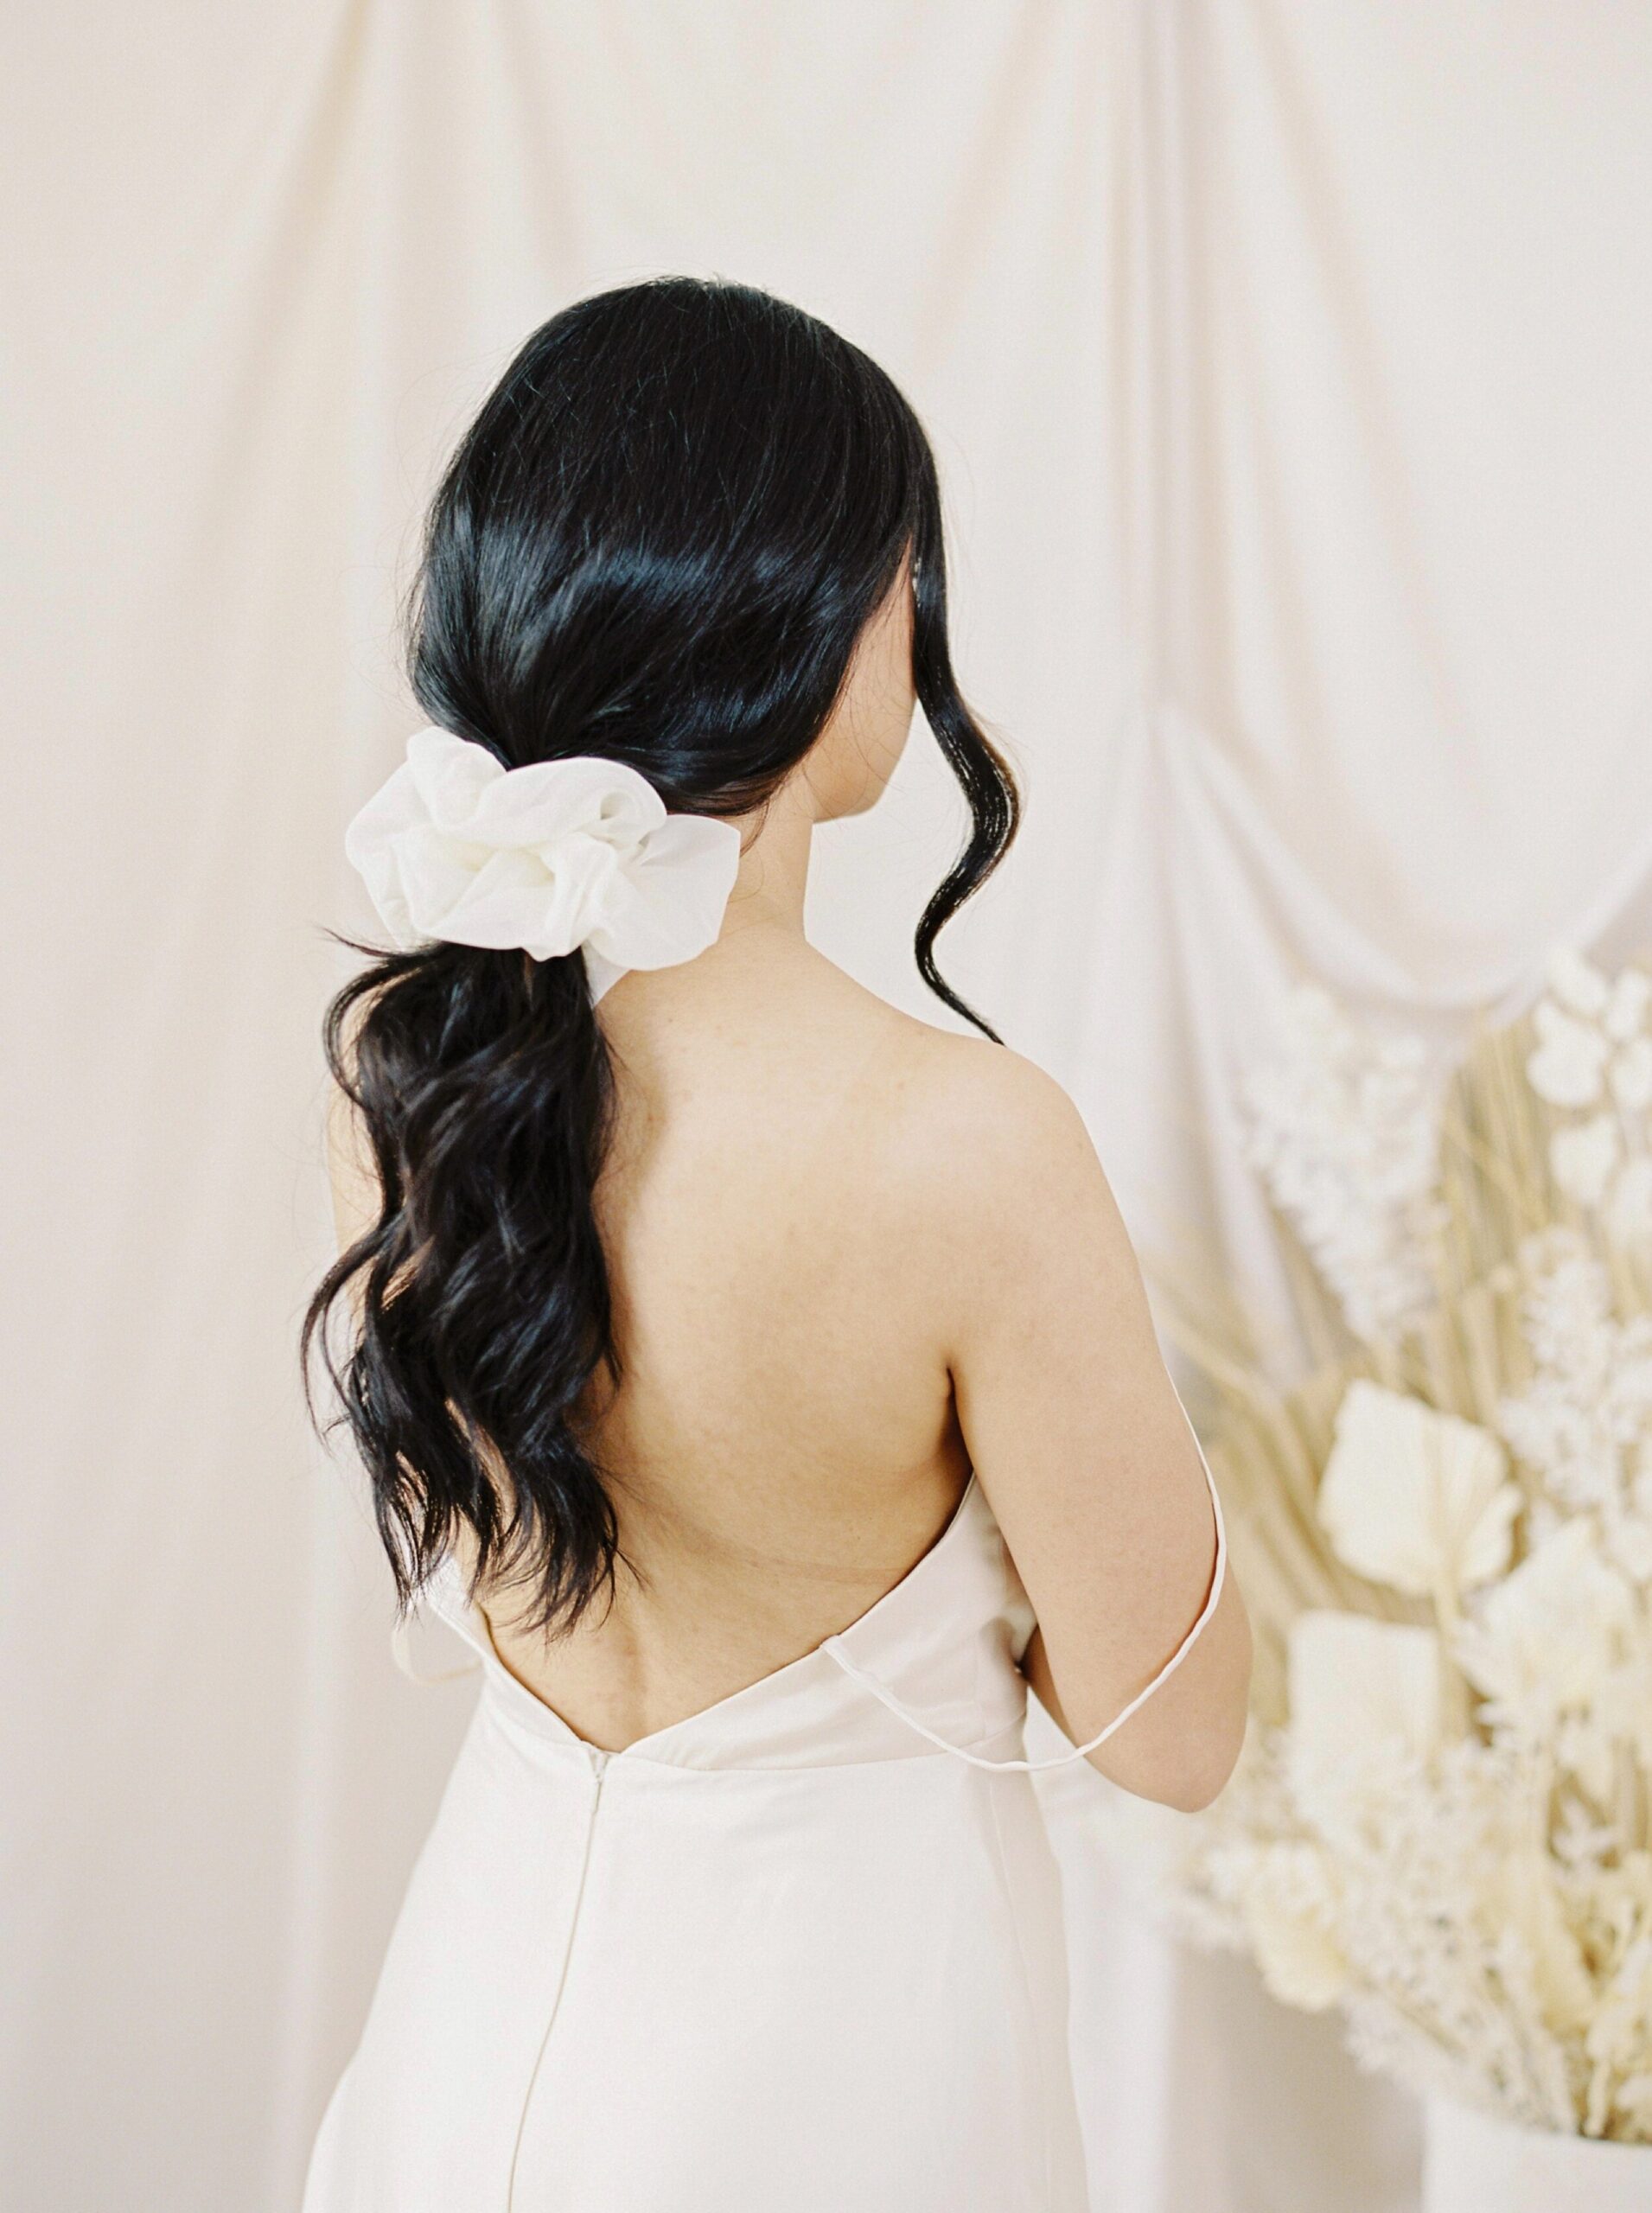  MAIDE bridesmaids dresses scrunchies and accesories calgary fashion label | calgary fashion wedding photographers 